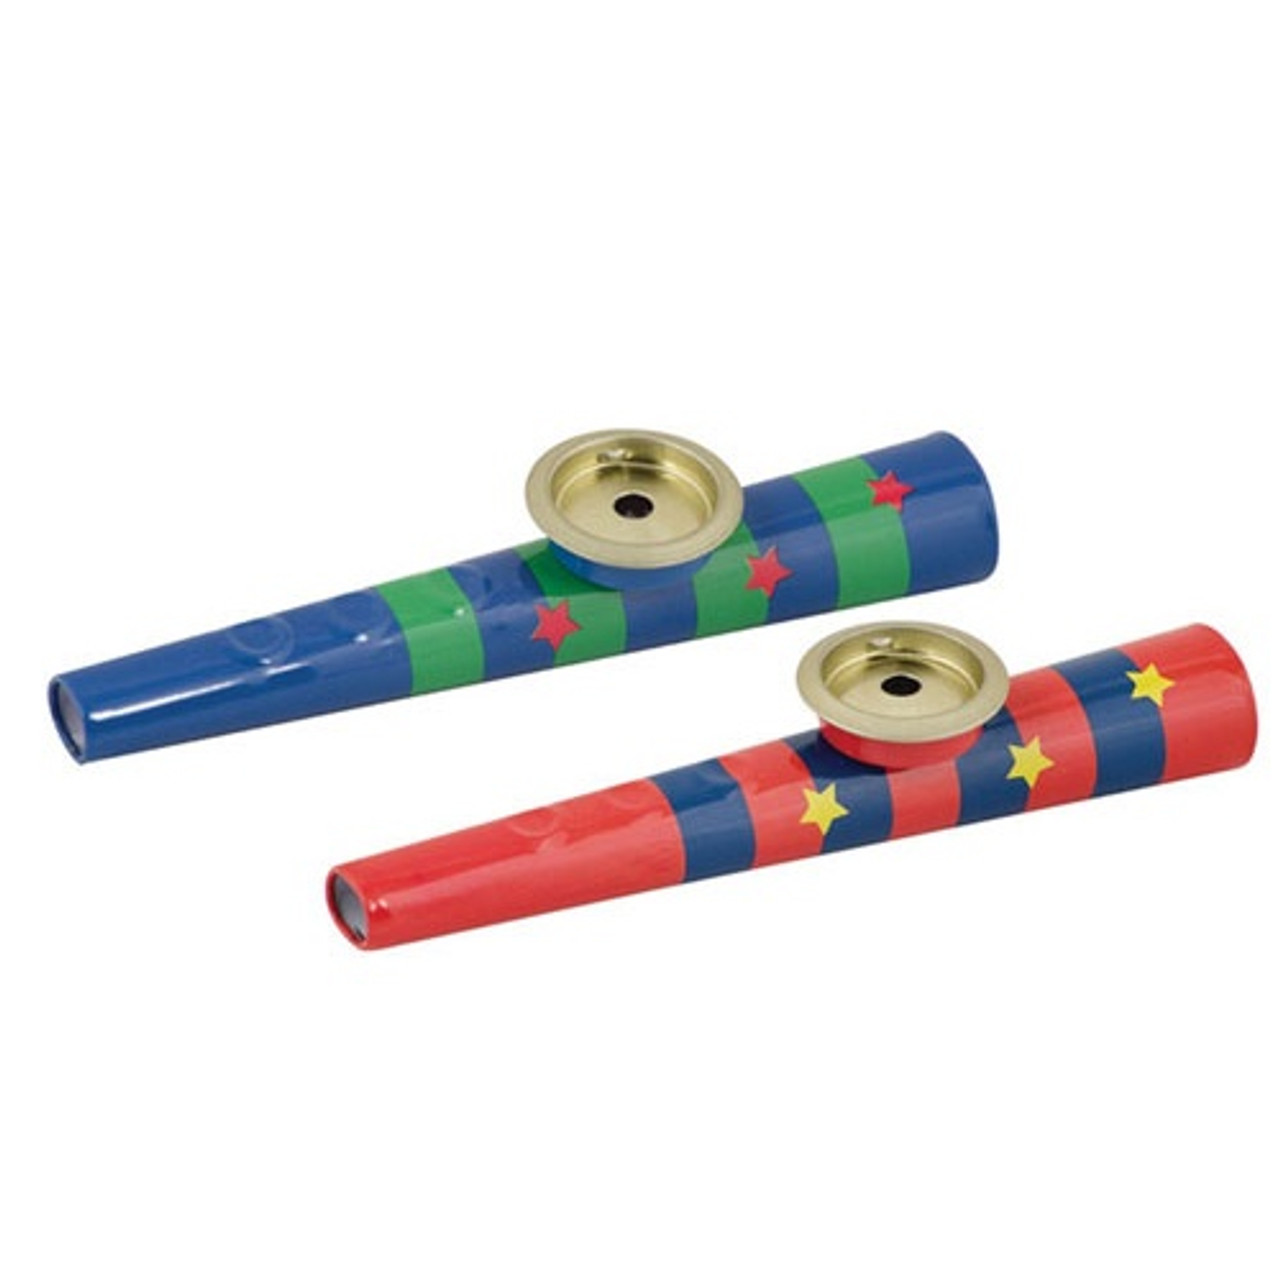  Risbay 6Pcs 6Colors Metal Kazoos Musical Instrument